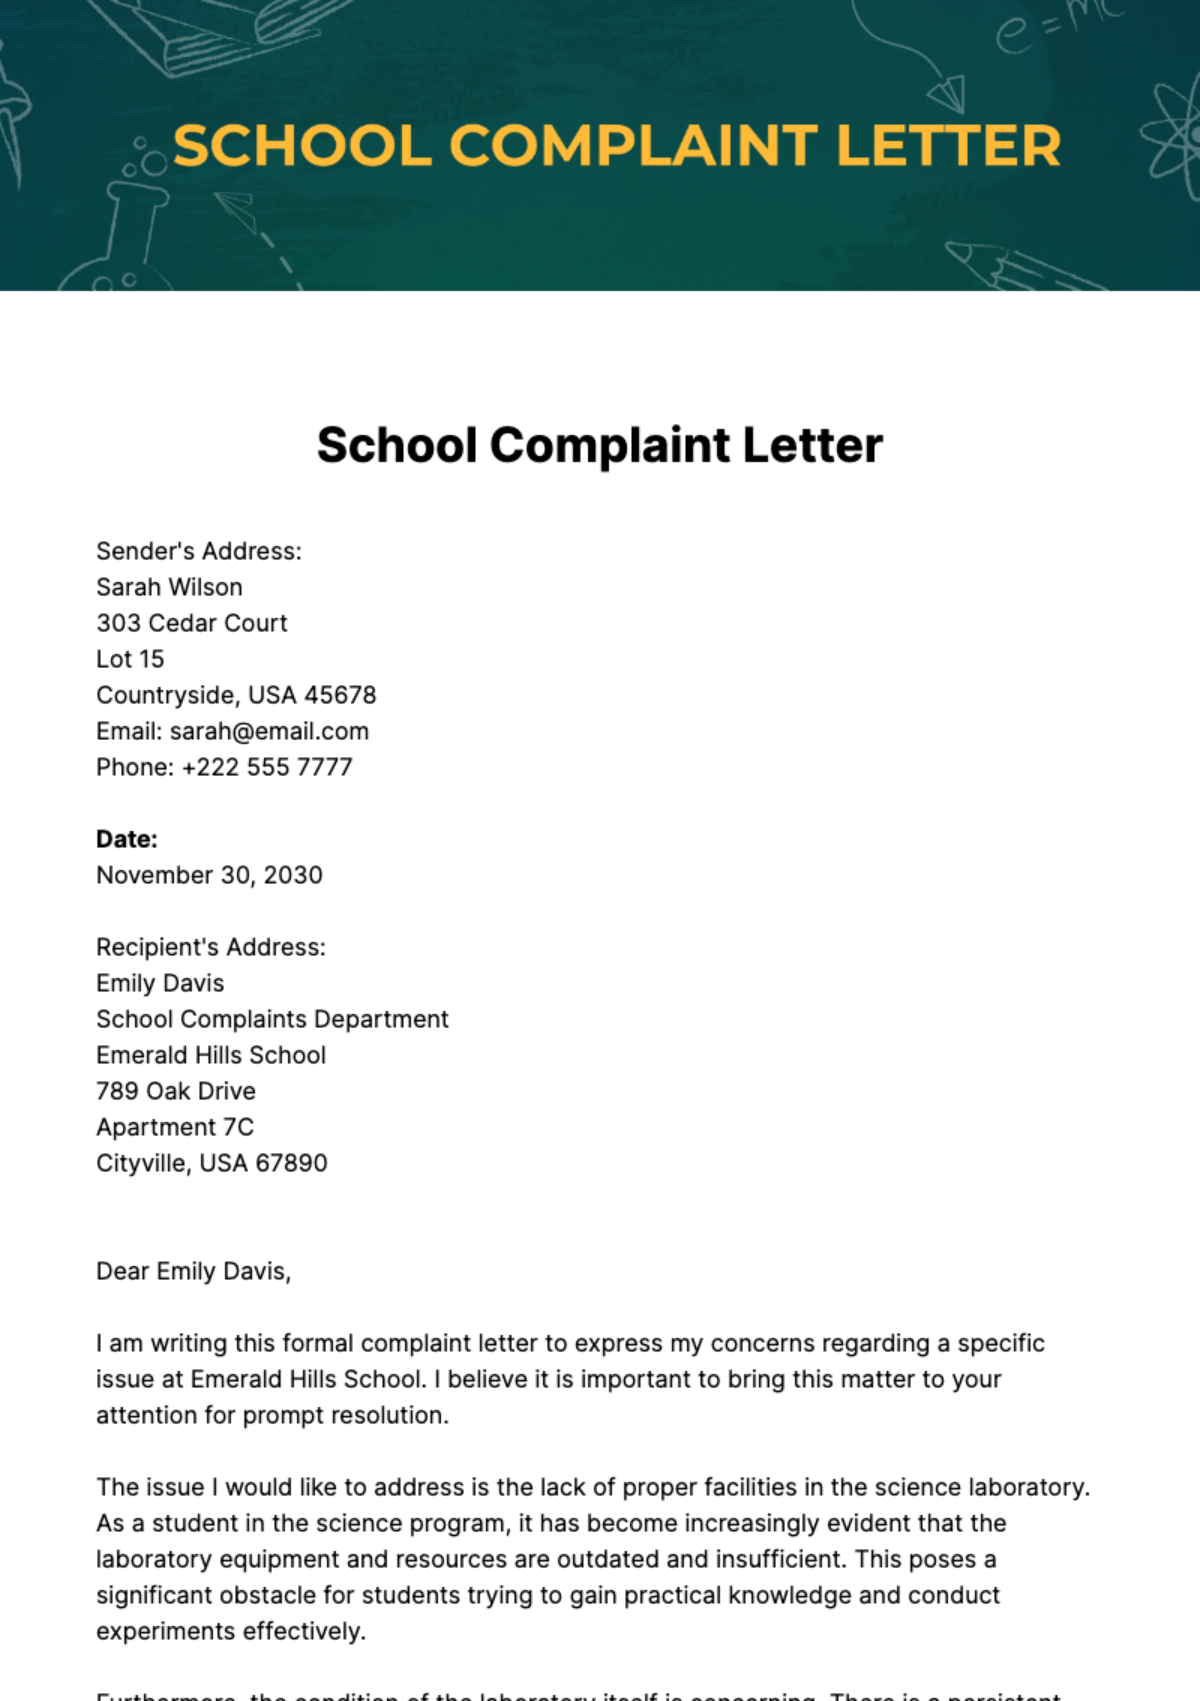 Free School Complaint Letter Template